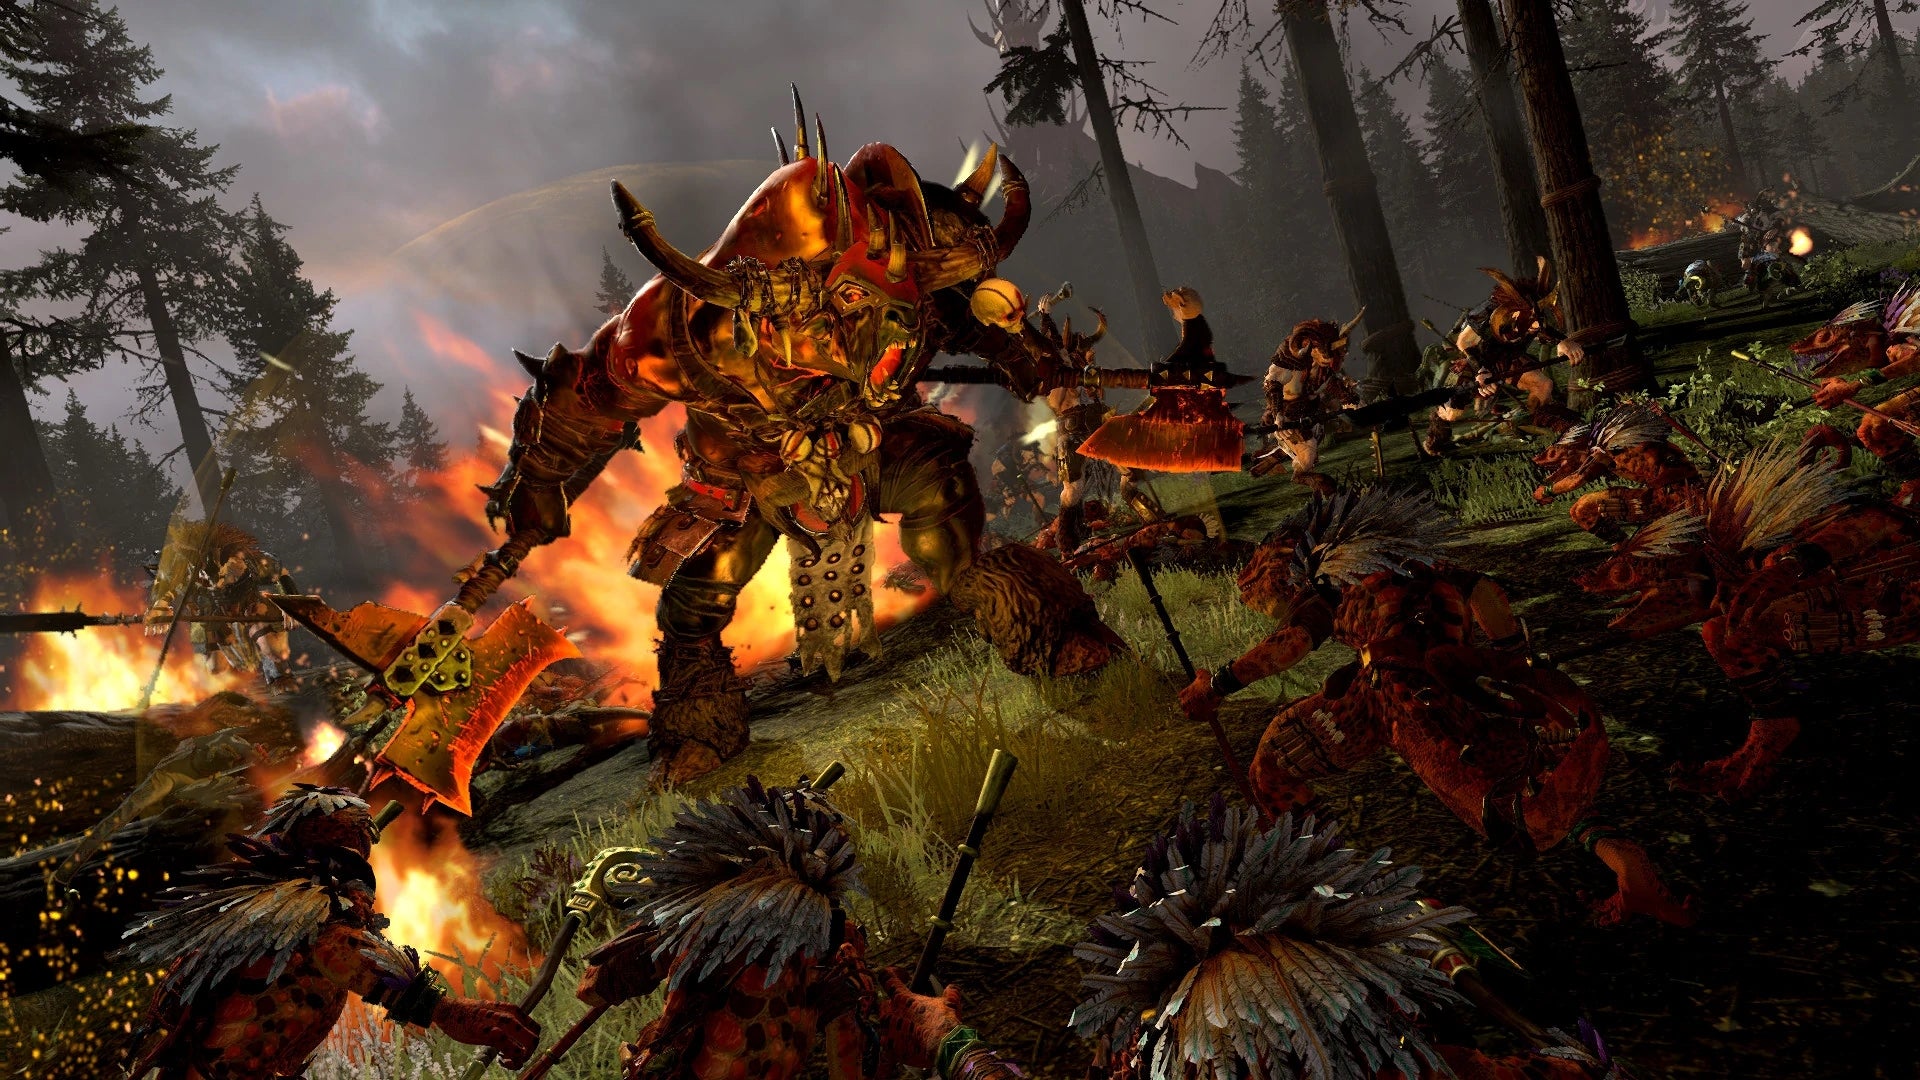 A large raging bull character roars in a forest battlefield scene in Total War: Warhammer 2